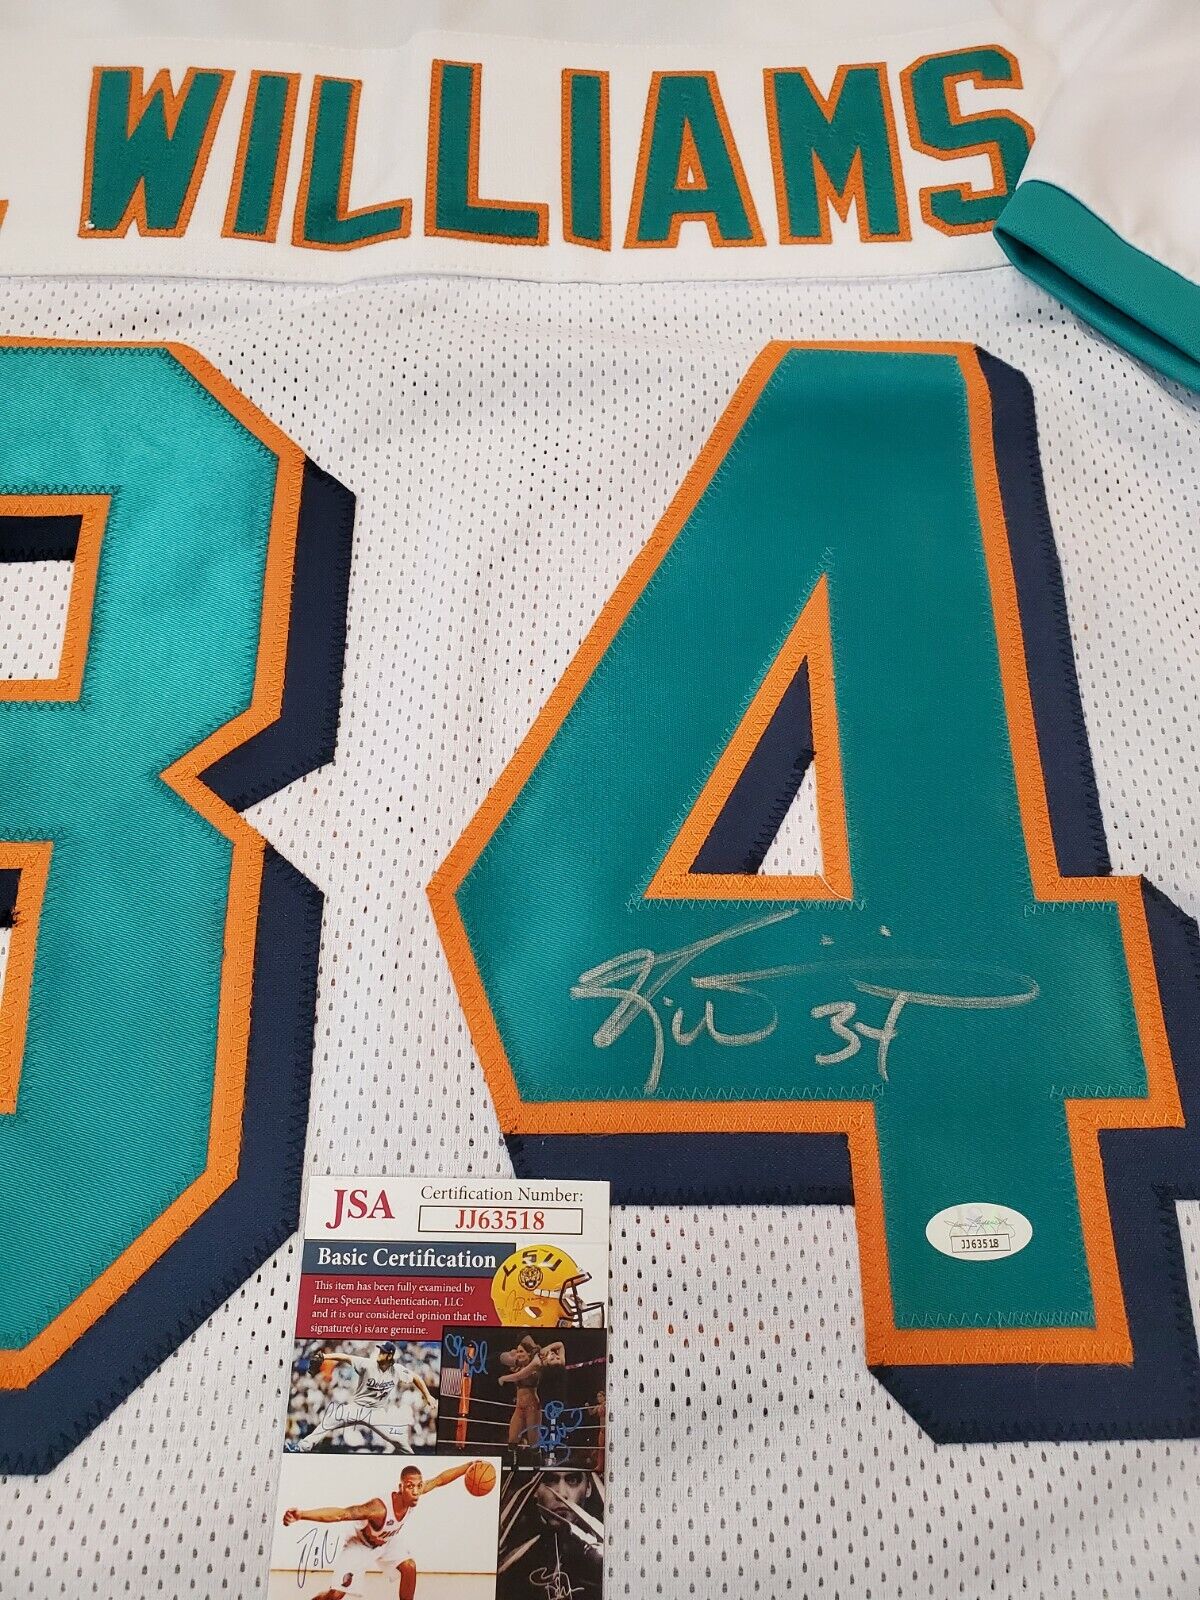 Ricky Williams Miami Dolphins Signed Dolphins AMP Speed Mini Helmet with  Miami Vice (JSA COA)